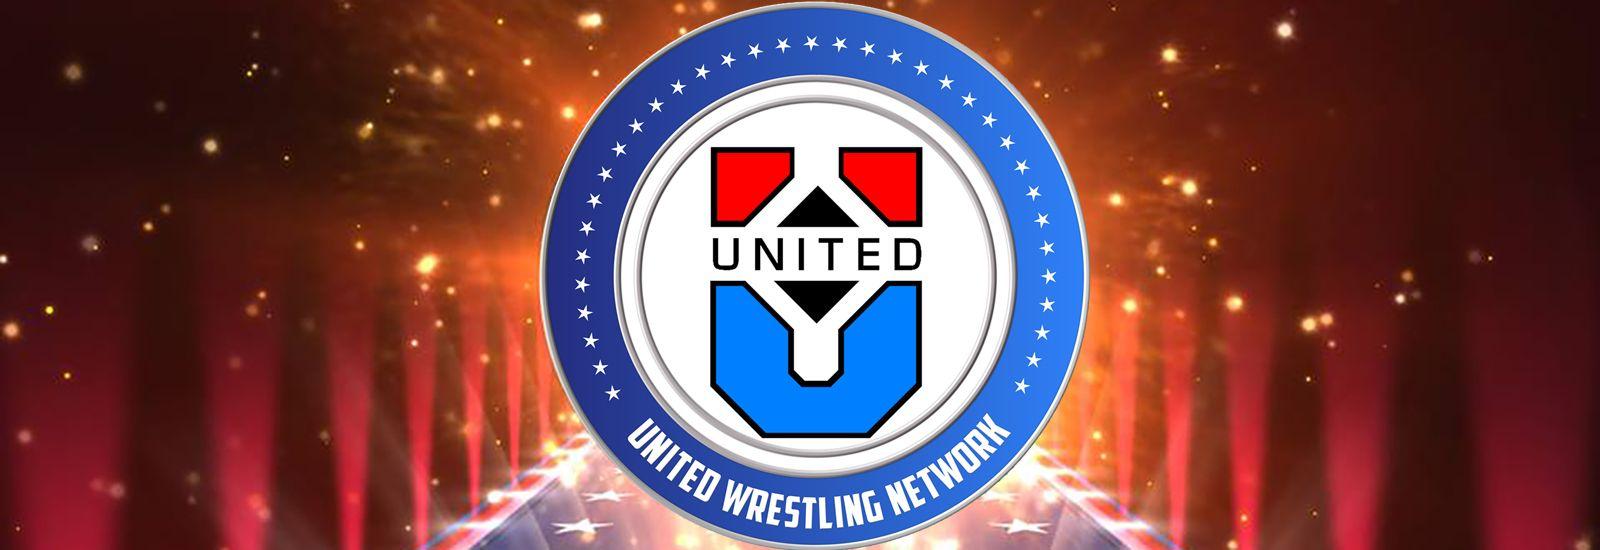 United Wrestling Logo - United Wrestling Network | Not your parents alliance